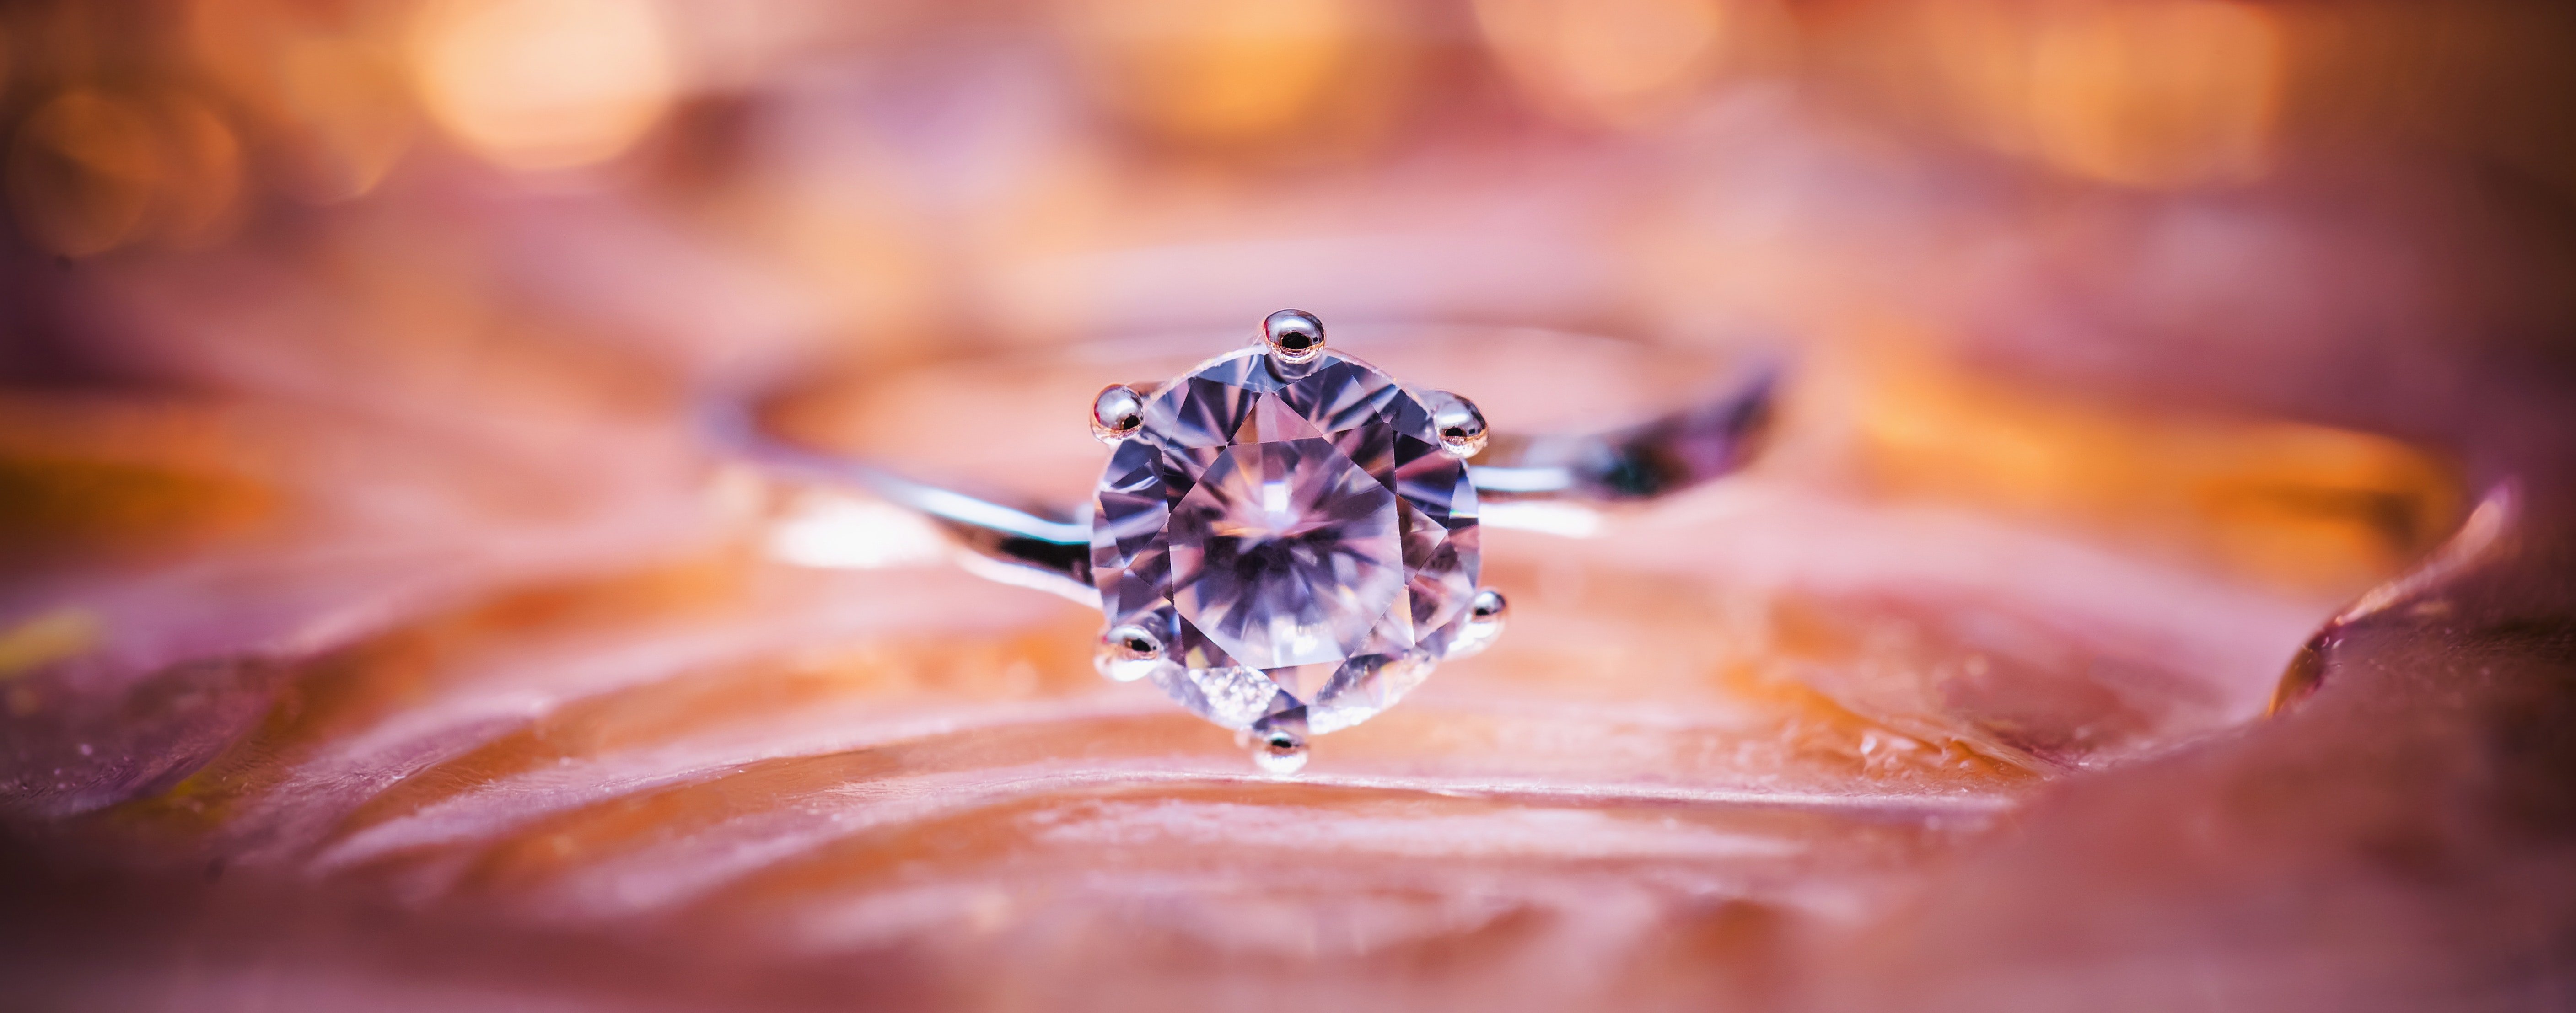 diamond-jewellery-jewelry-115567.jpg